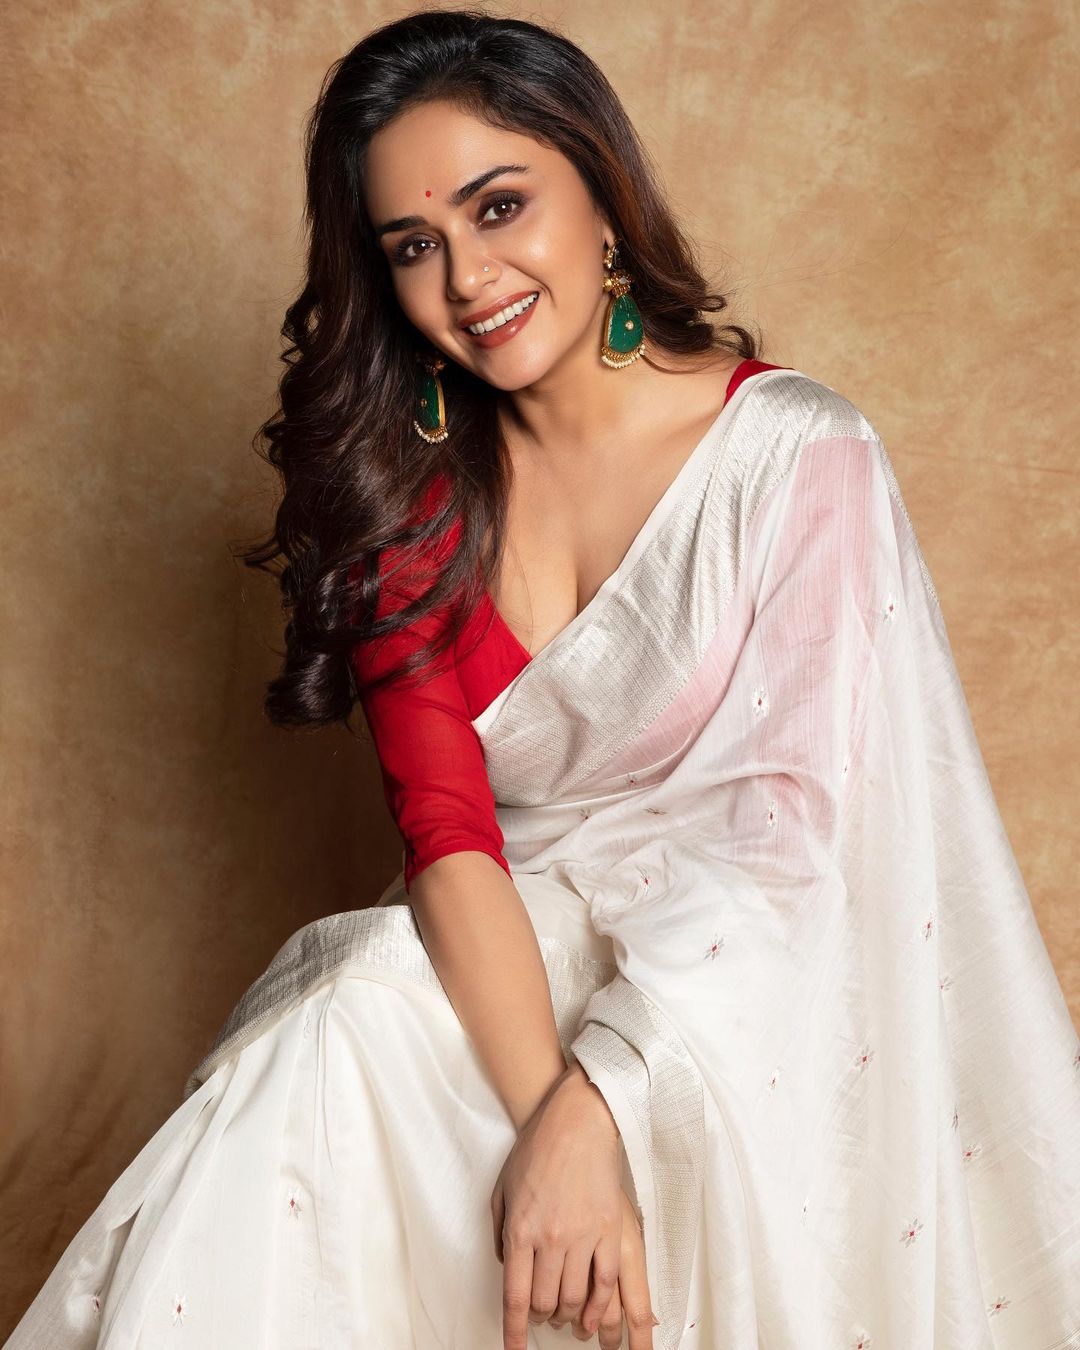 Maroon silk saree with blouse 3446